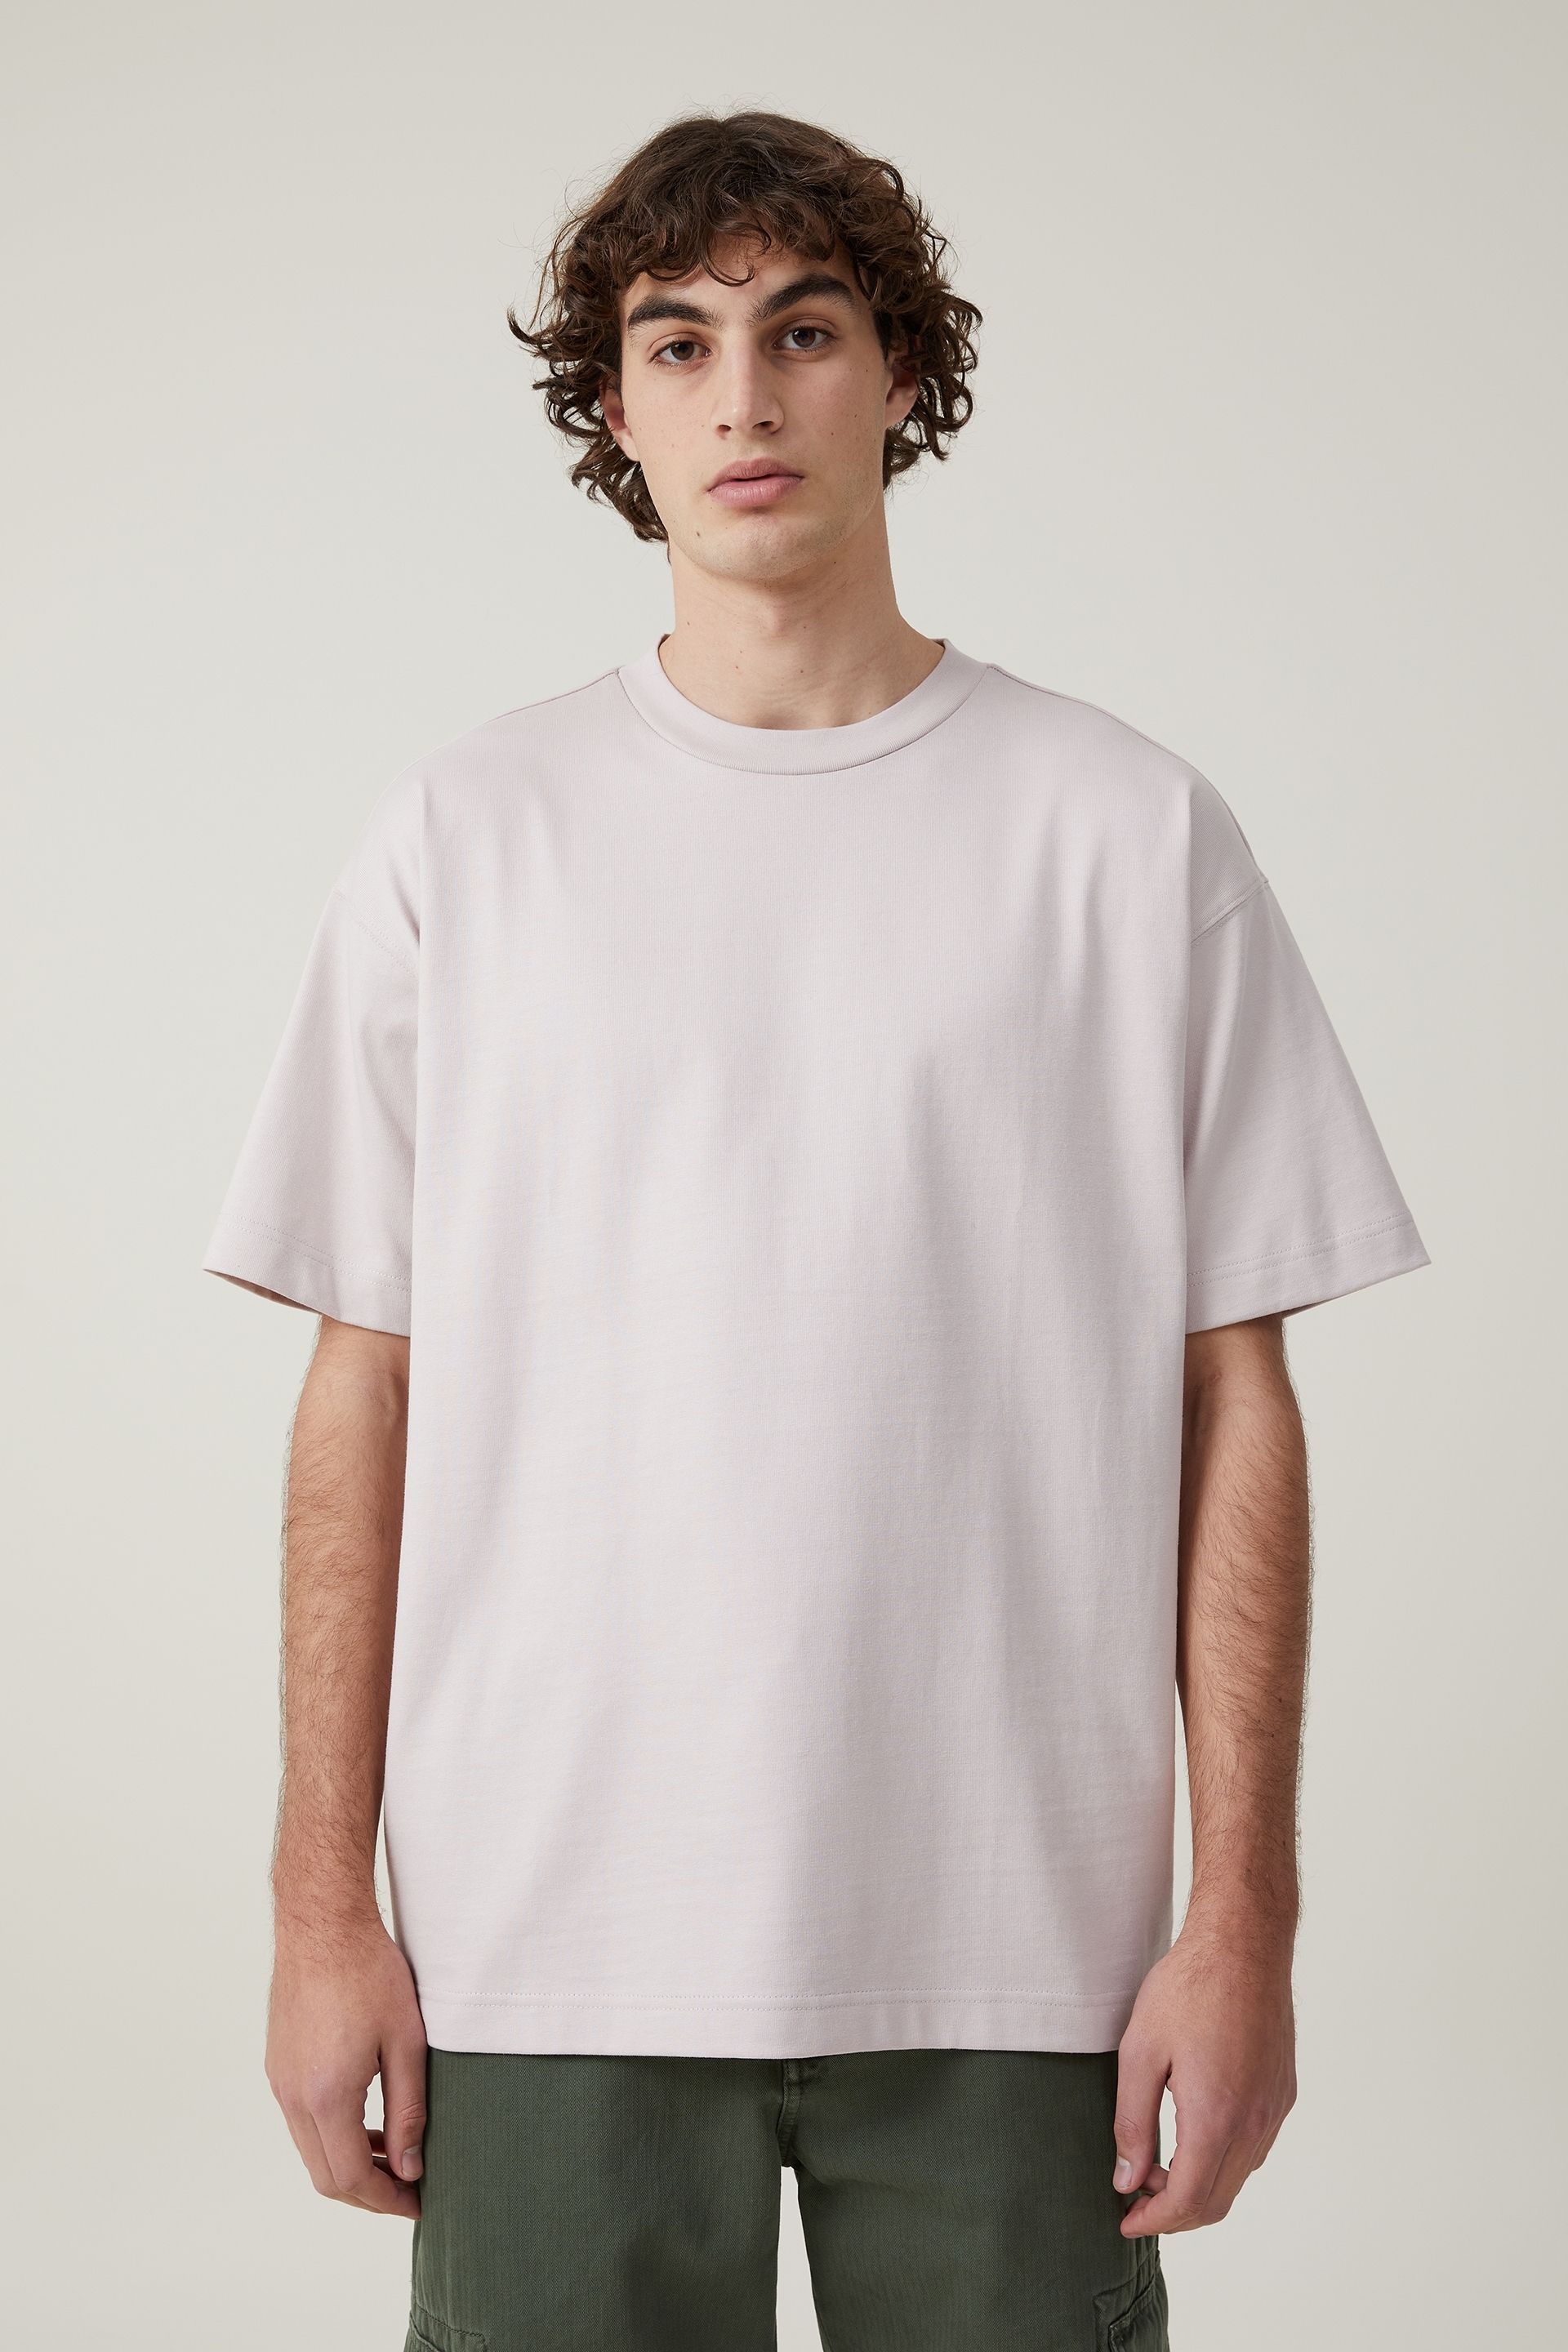 Cotton On Men - Box Fit Plain T-Shirt - Iced lilac